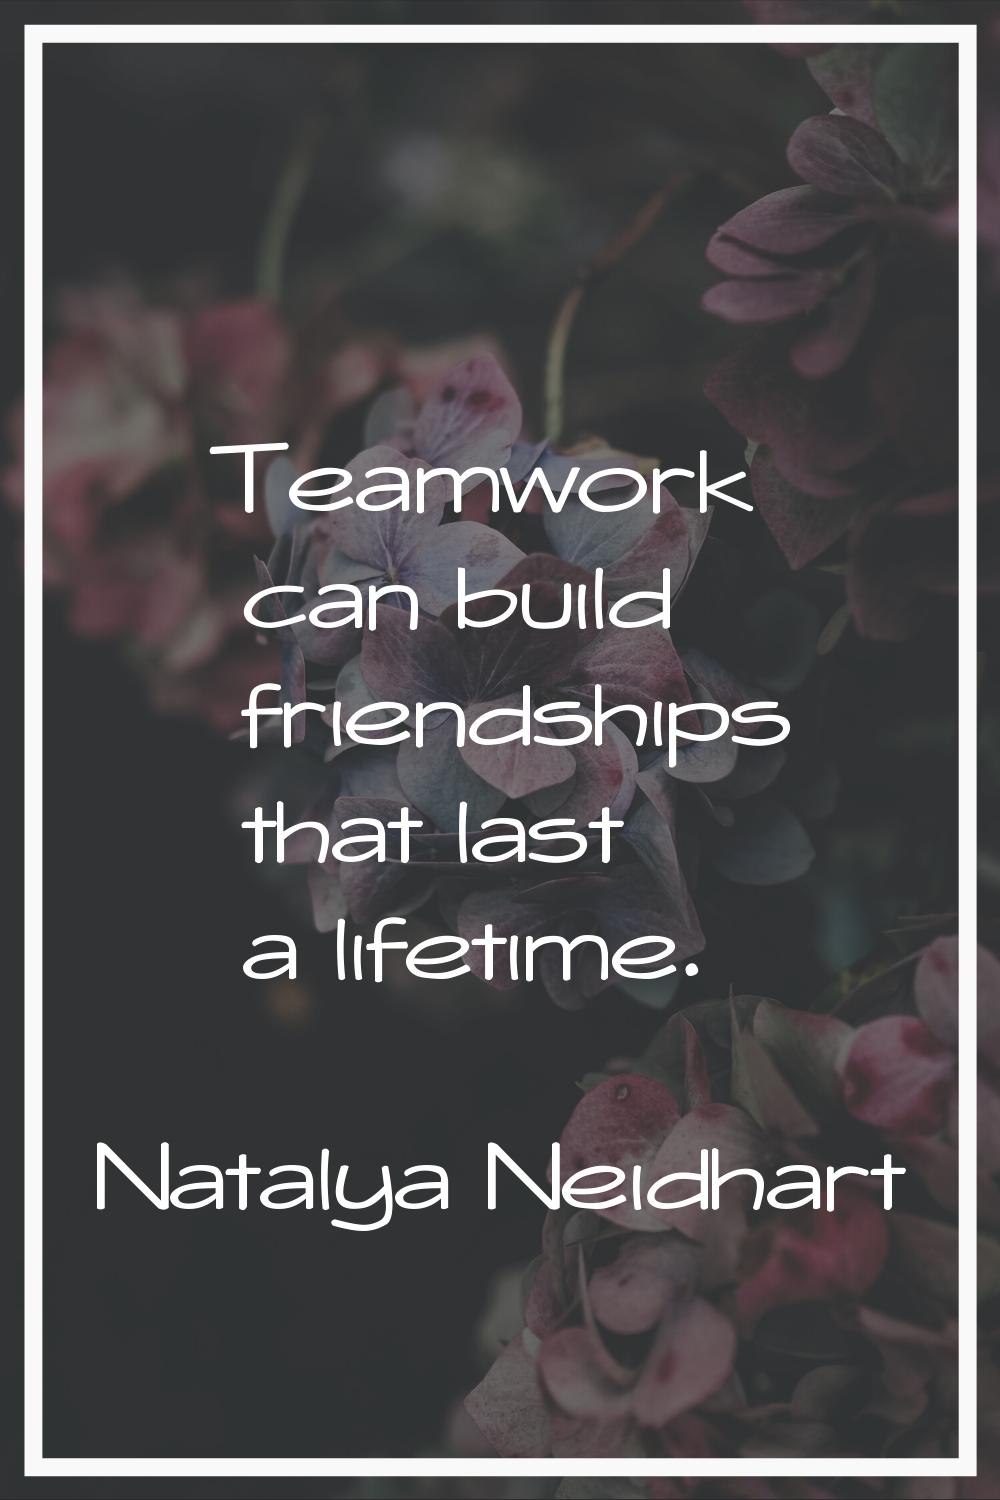 Teamwork can build friendships that last a lifetime.